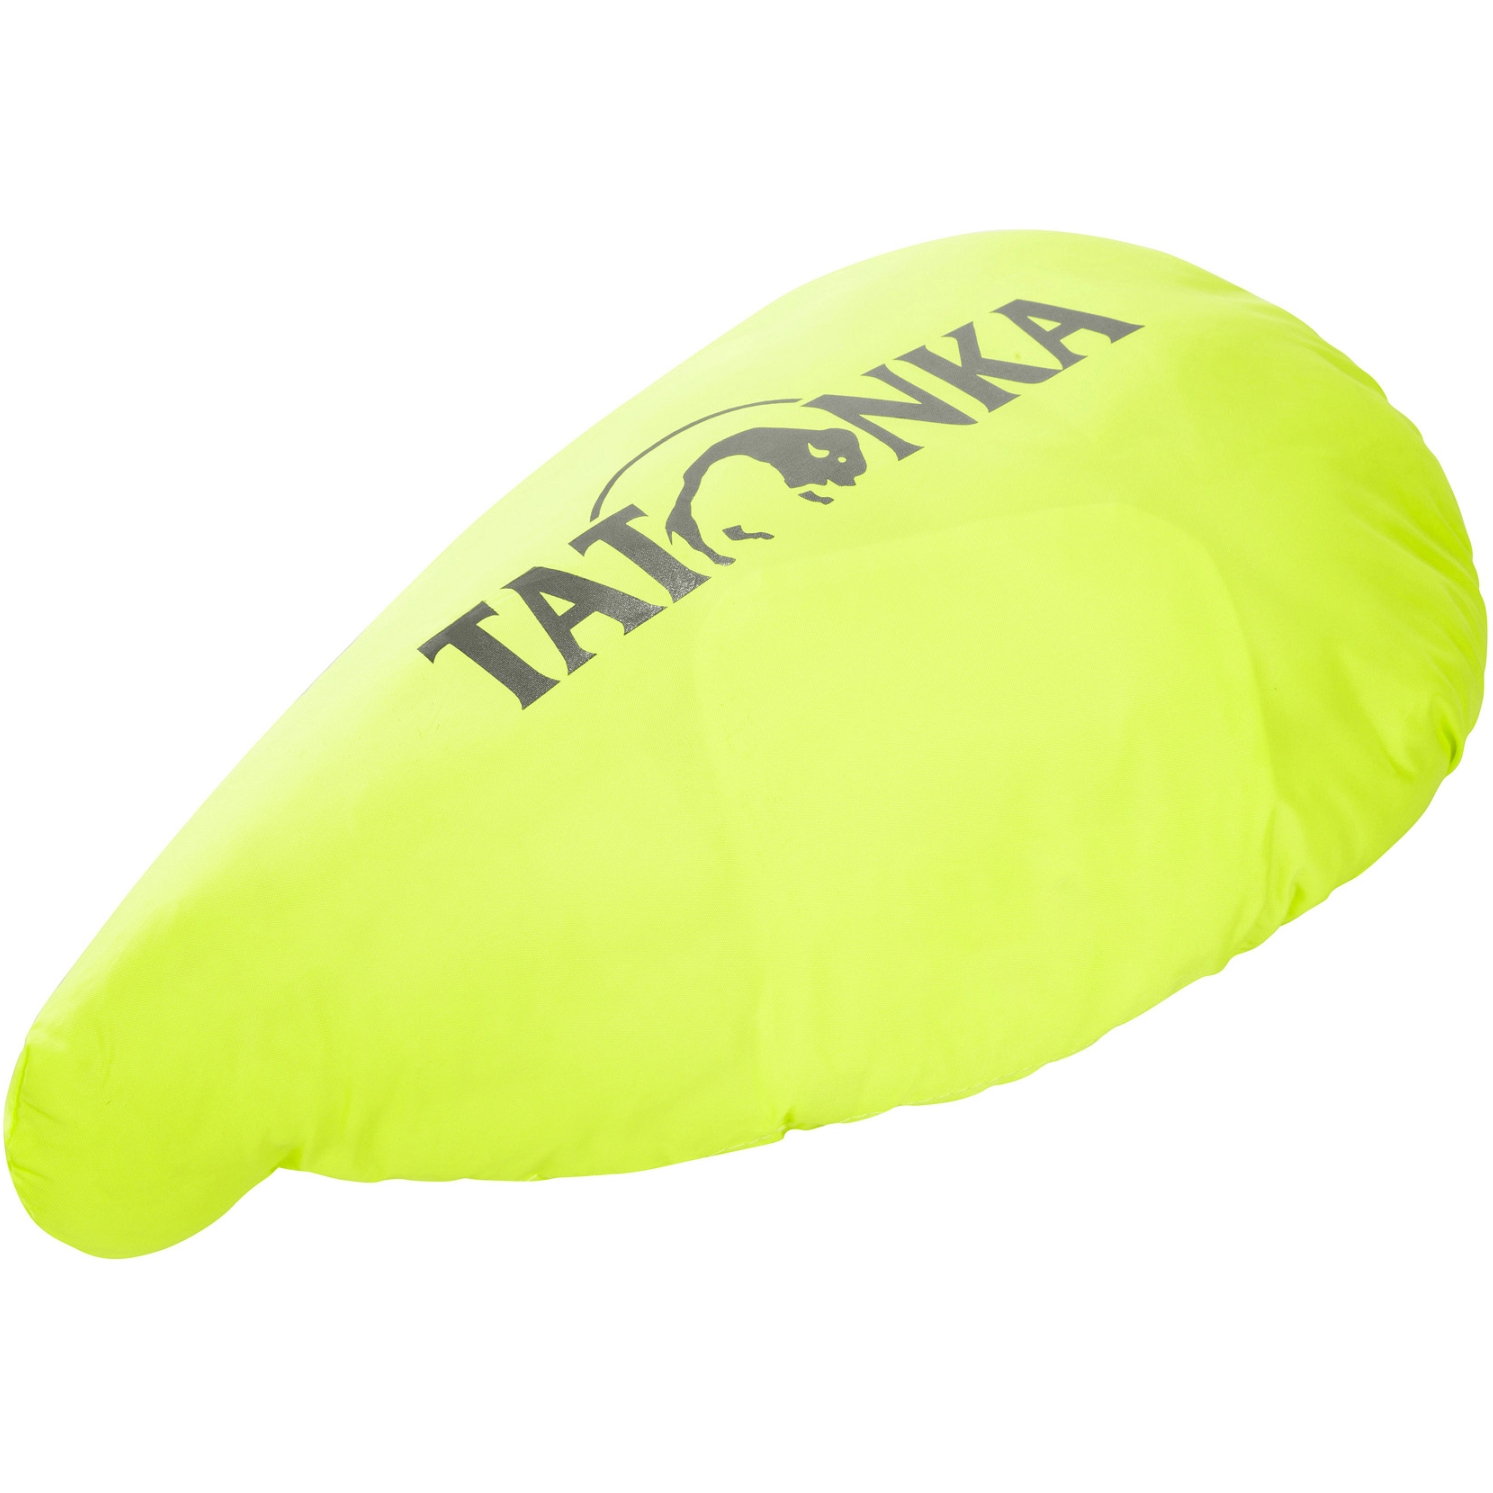 Produktbild von Tatonka Saddle Cover Sattelüberzug - safety yellow